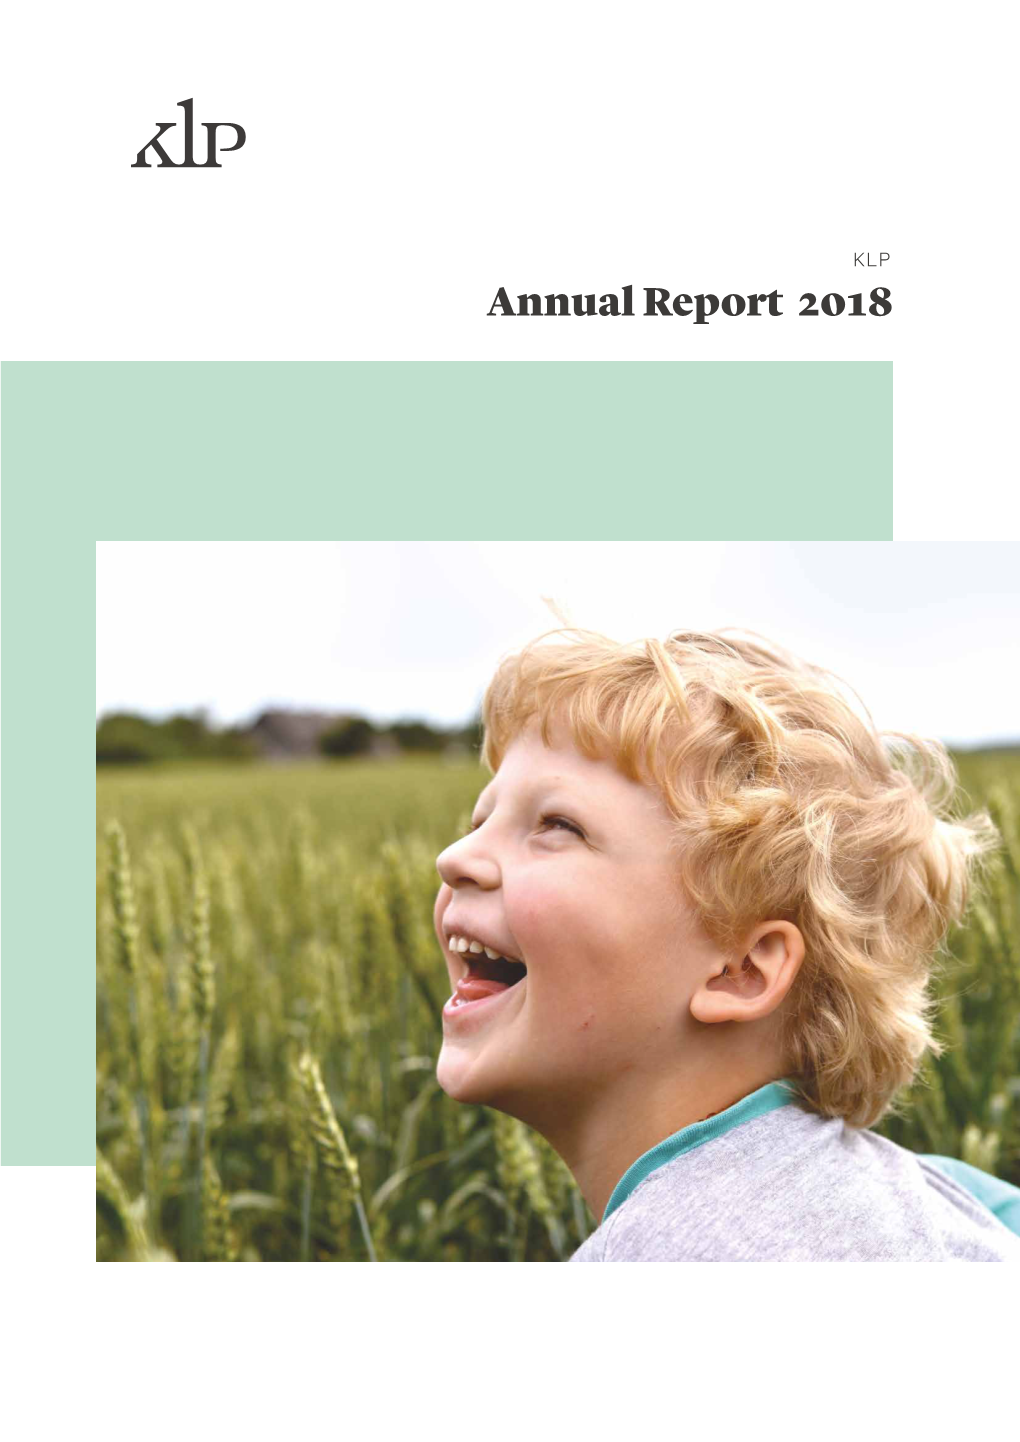 Annual Report 2018 KLP ANNUAL REPORT 2018